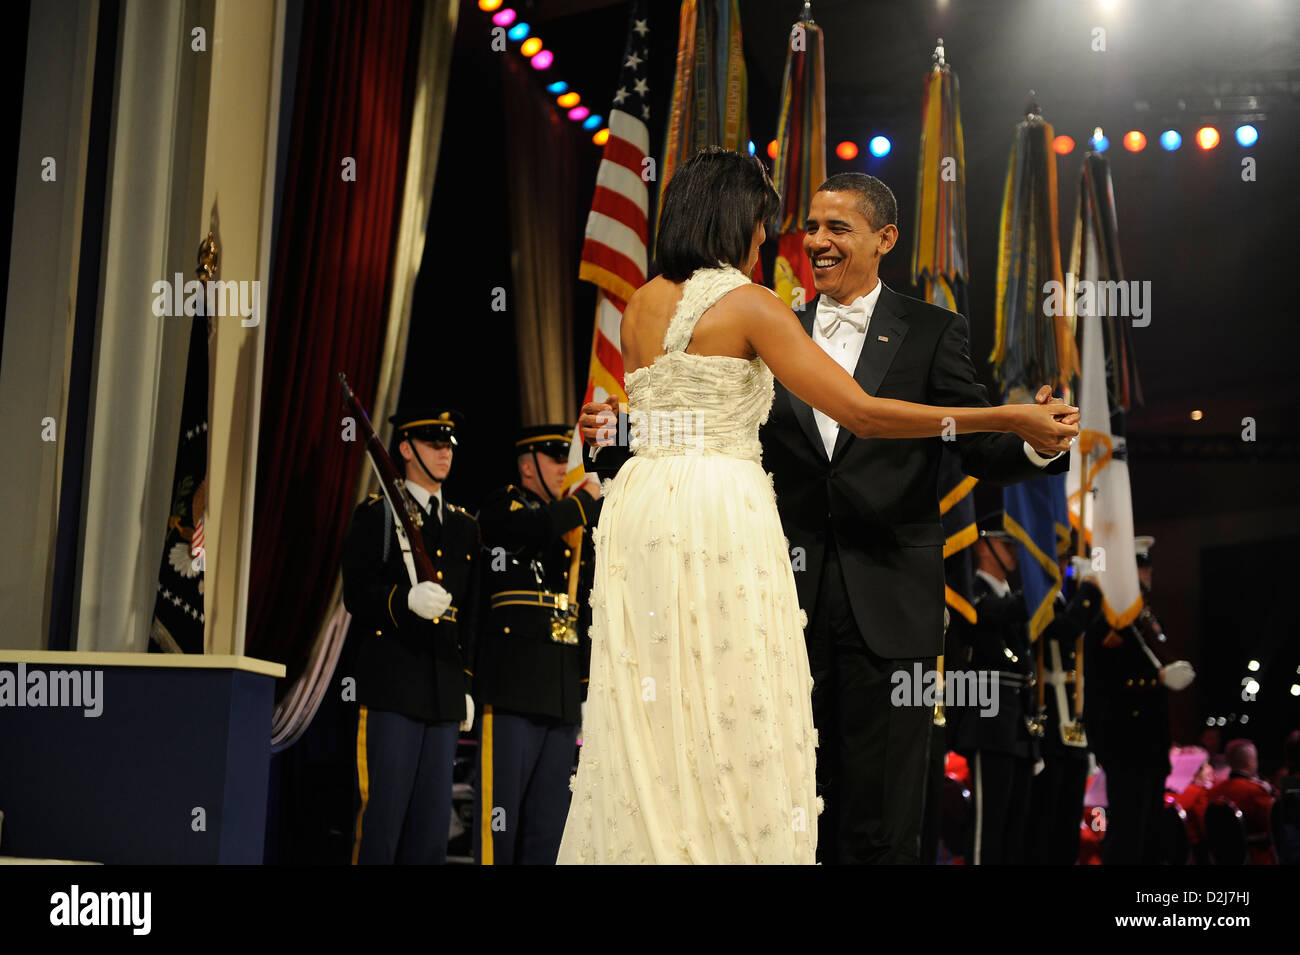 Präsident Barack Obama und First Lady Michelle Obama Tanz auf dem Mid-Atlantic-Ball in Washington, DC 20. Januar 2009. Stockfoto